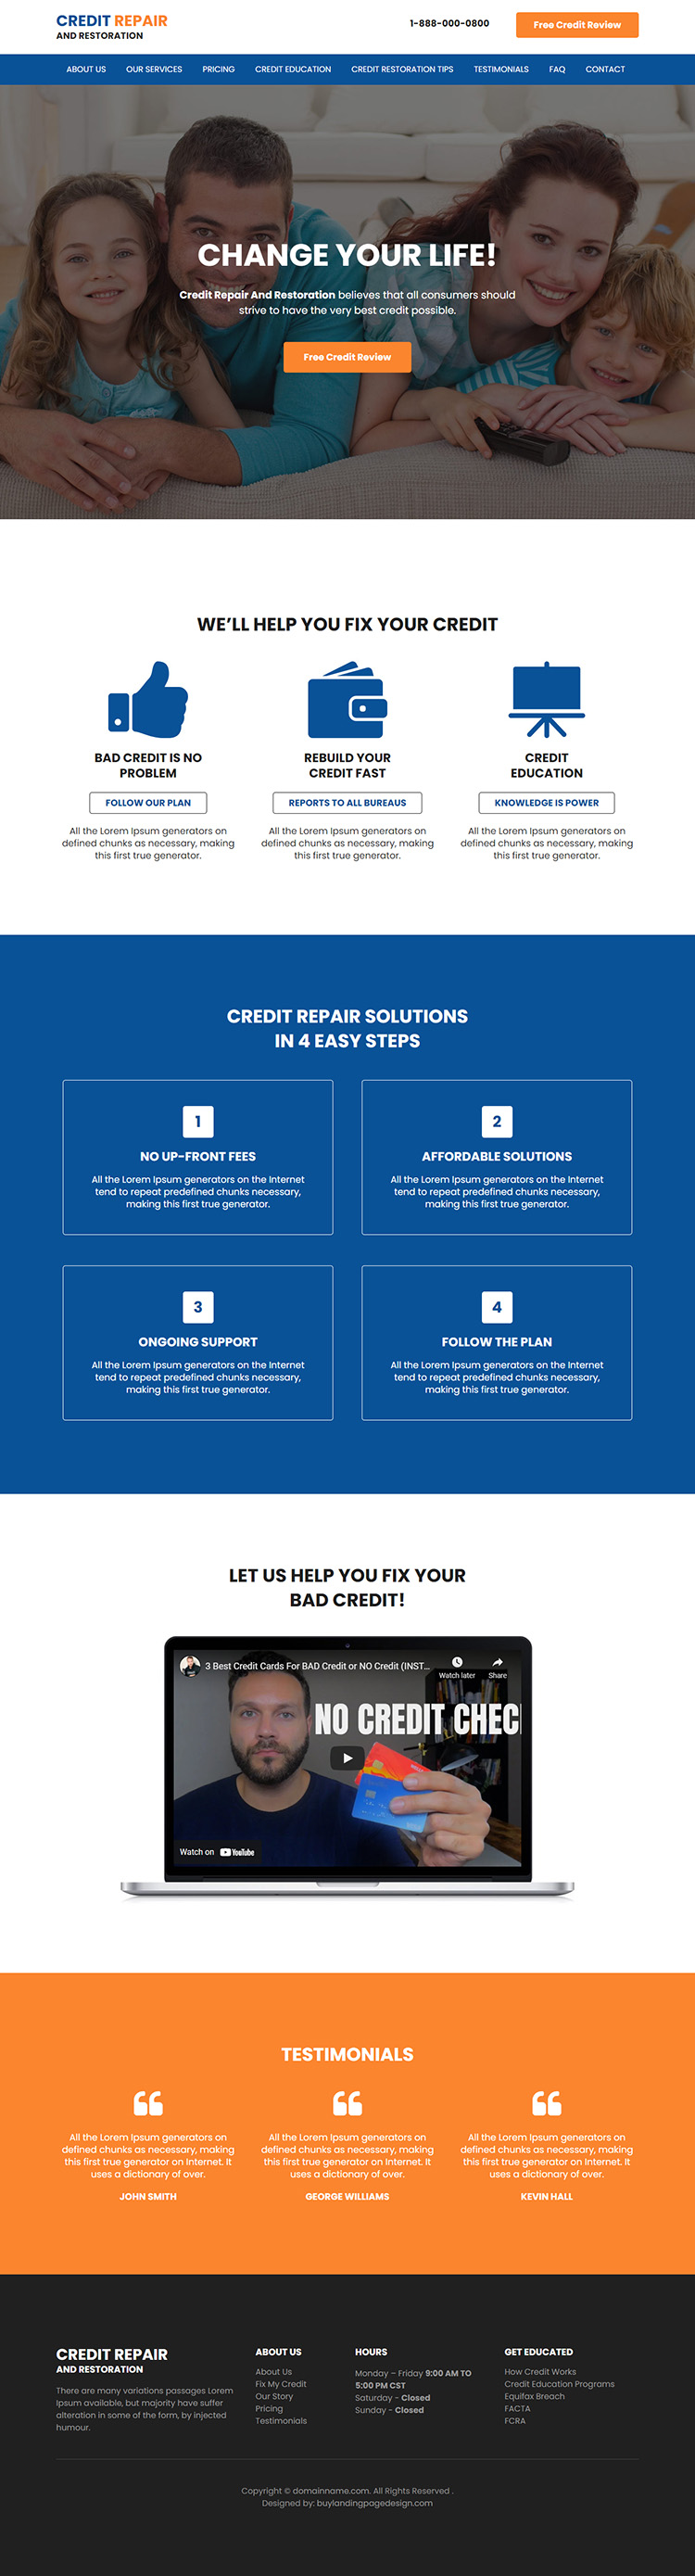 credit repair and restoration service responsive website design